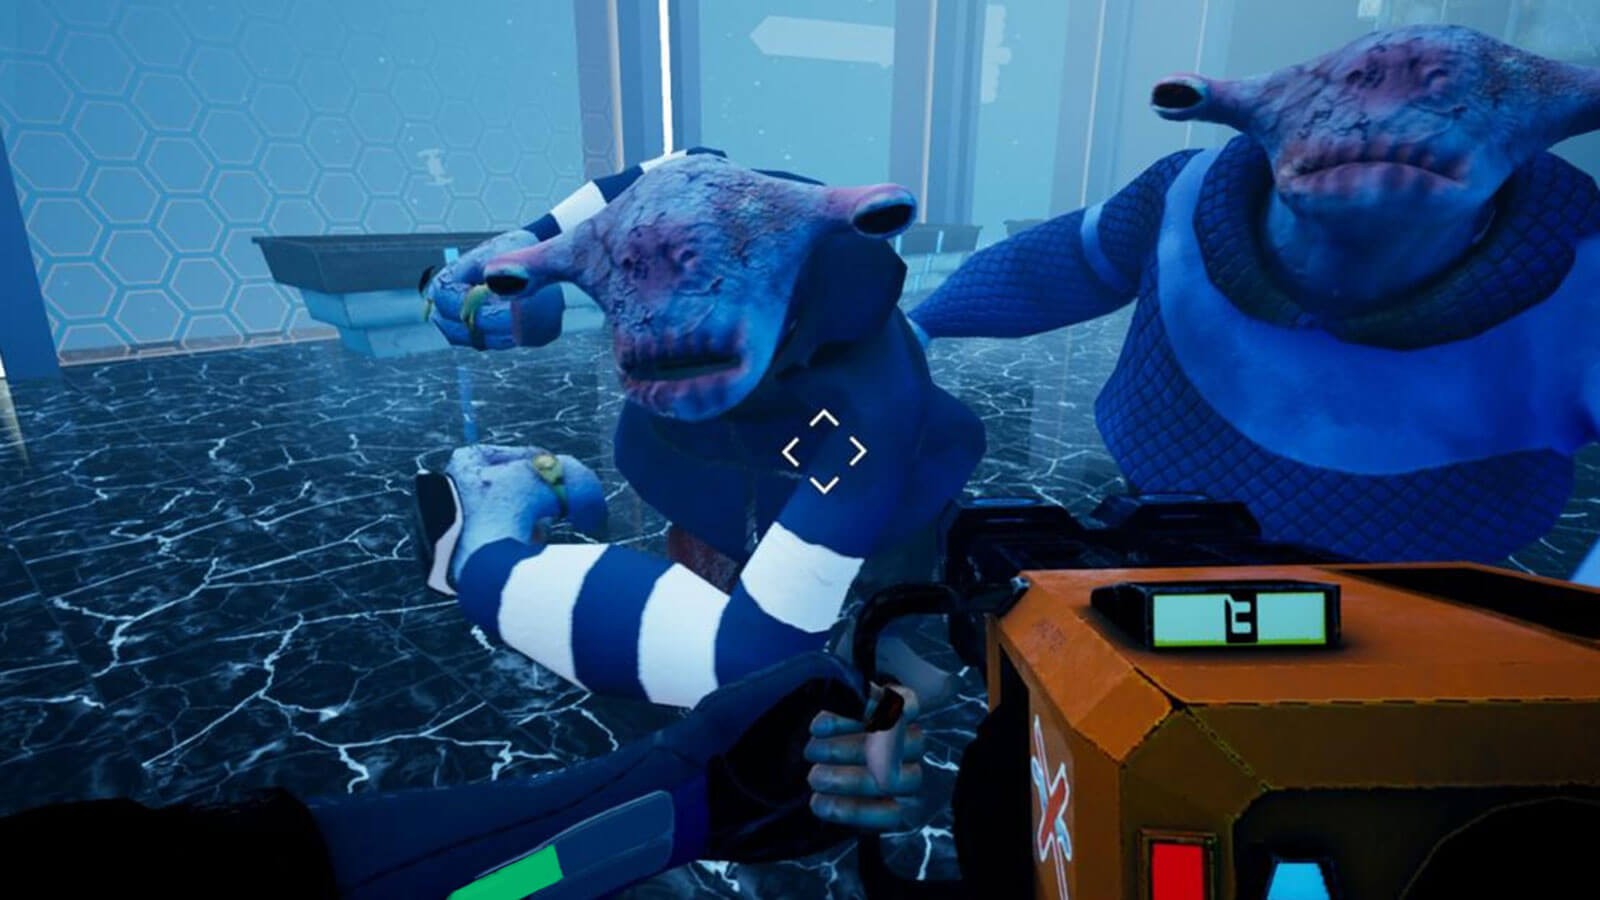 Dos extraterrestres con jerseys atacan a un jugador que sostiene un dispositivo lanzacohetes.